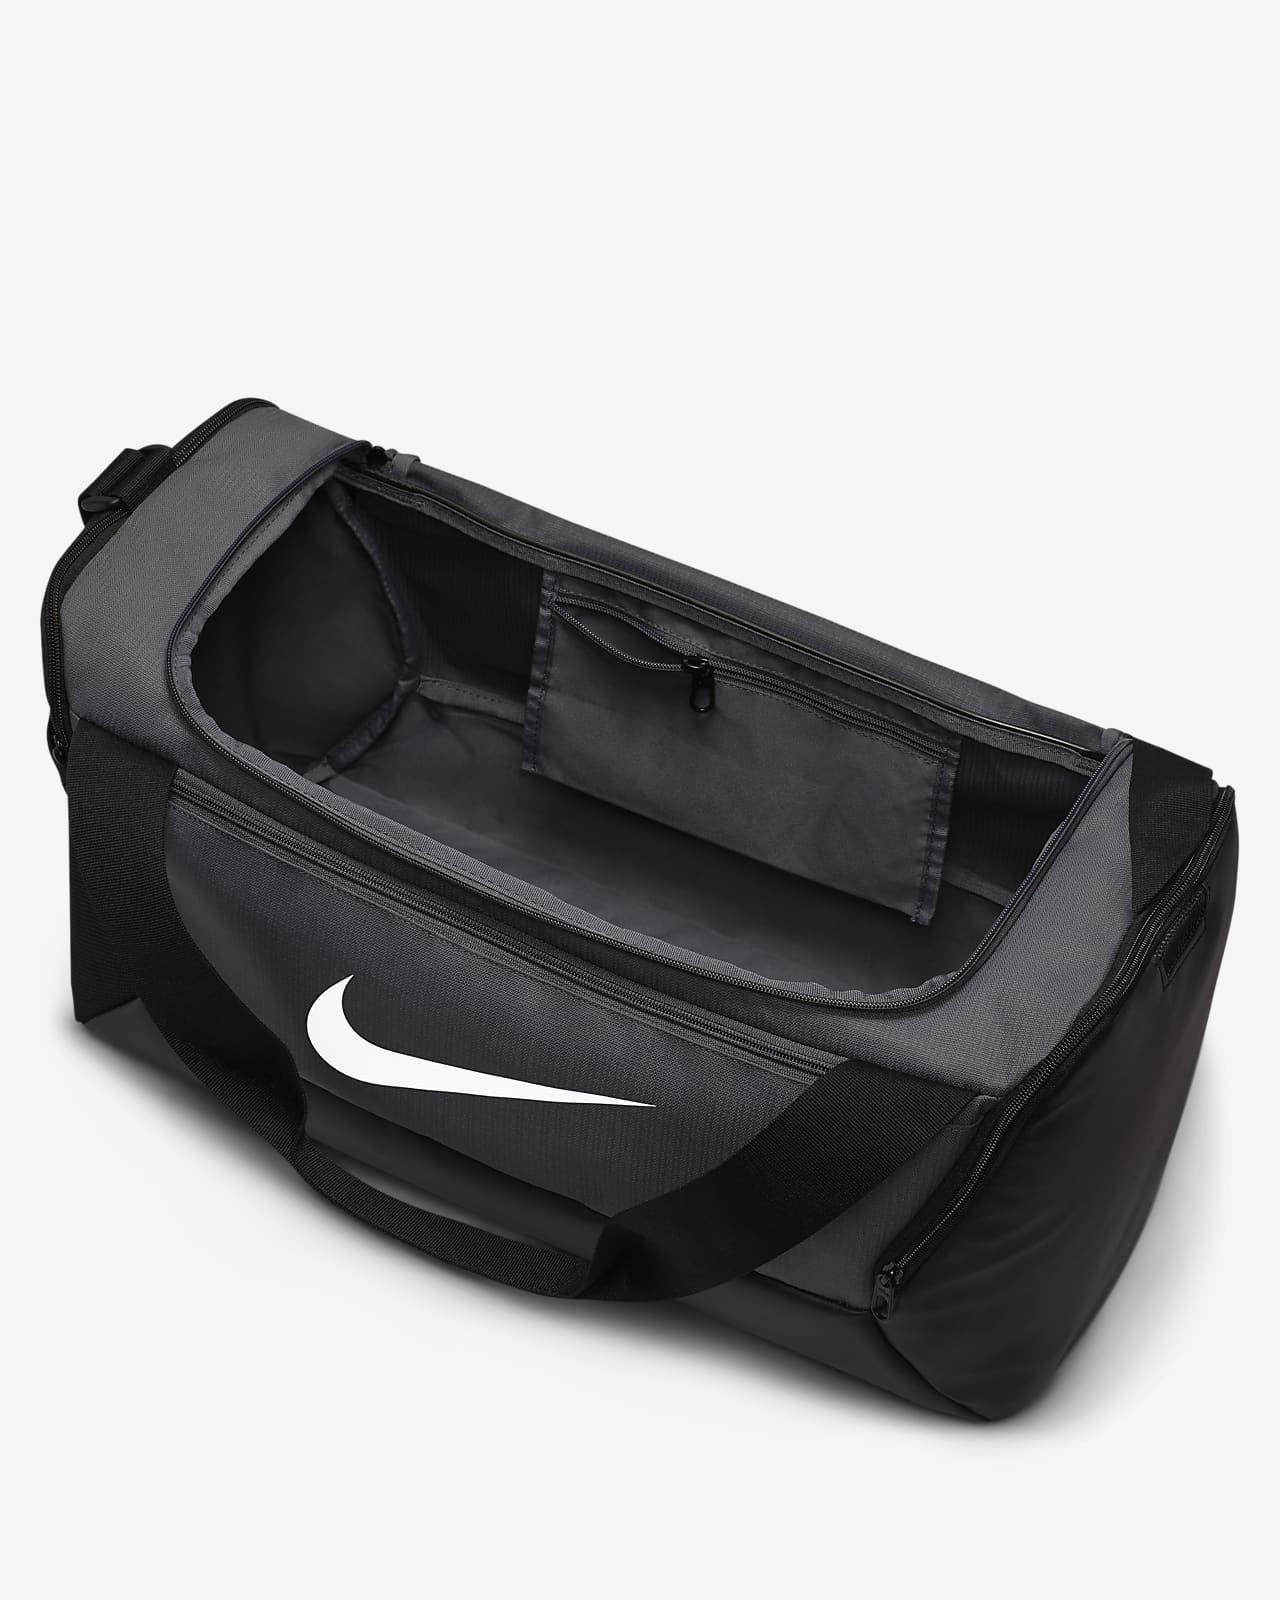 Nike Brasilia Camo Duffel Bag Size Small, Black, Nike Brasilia